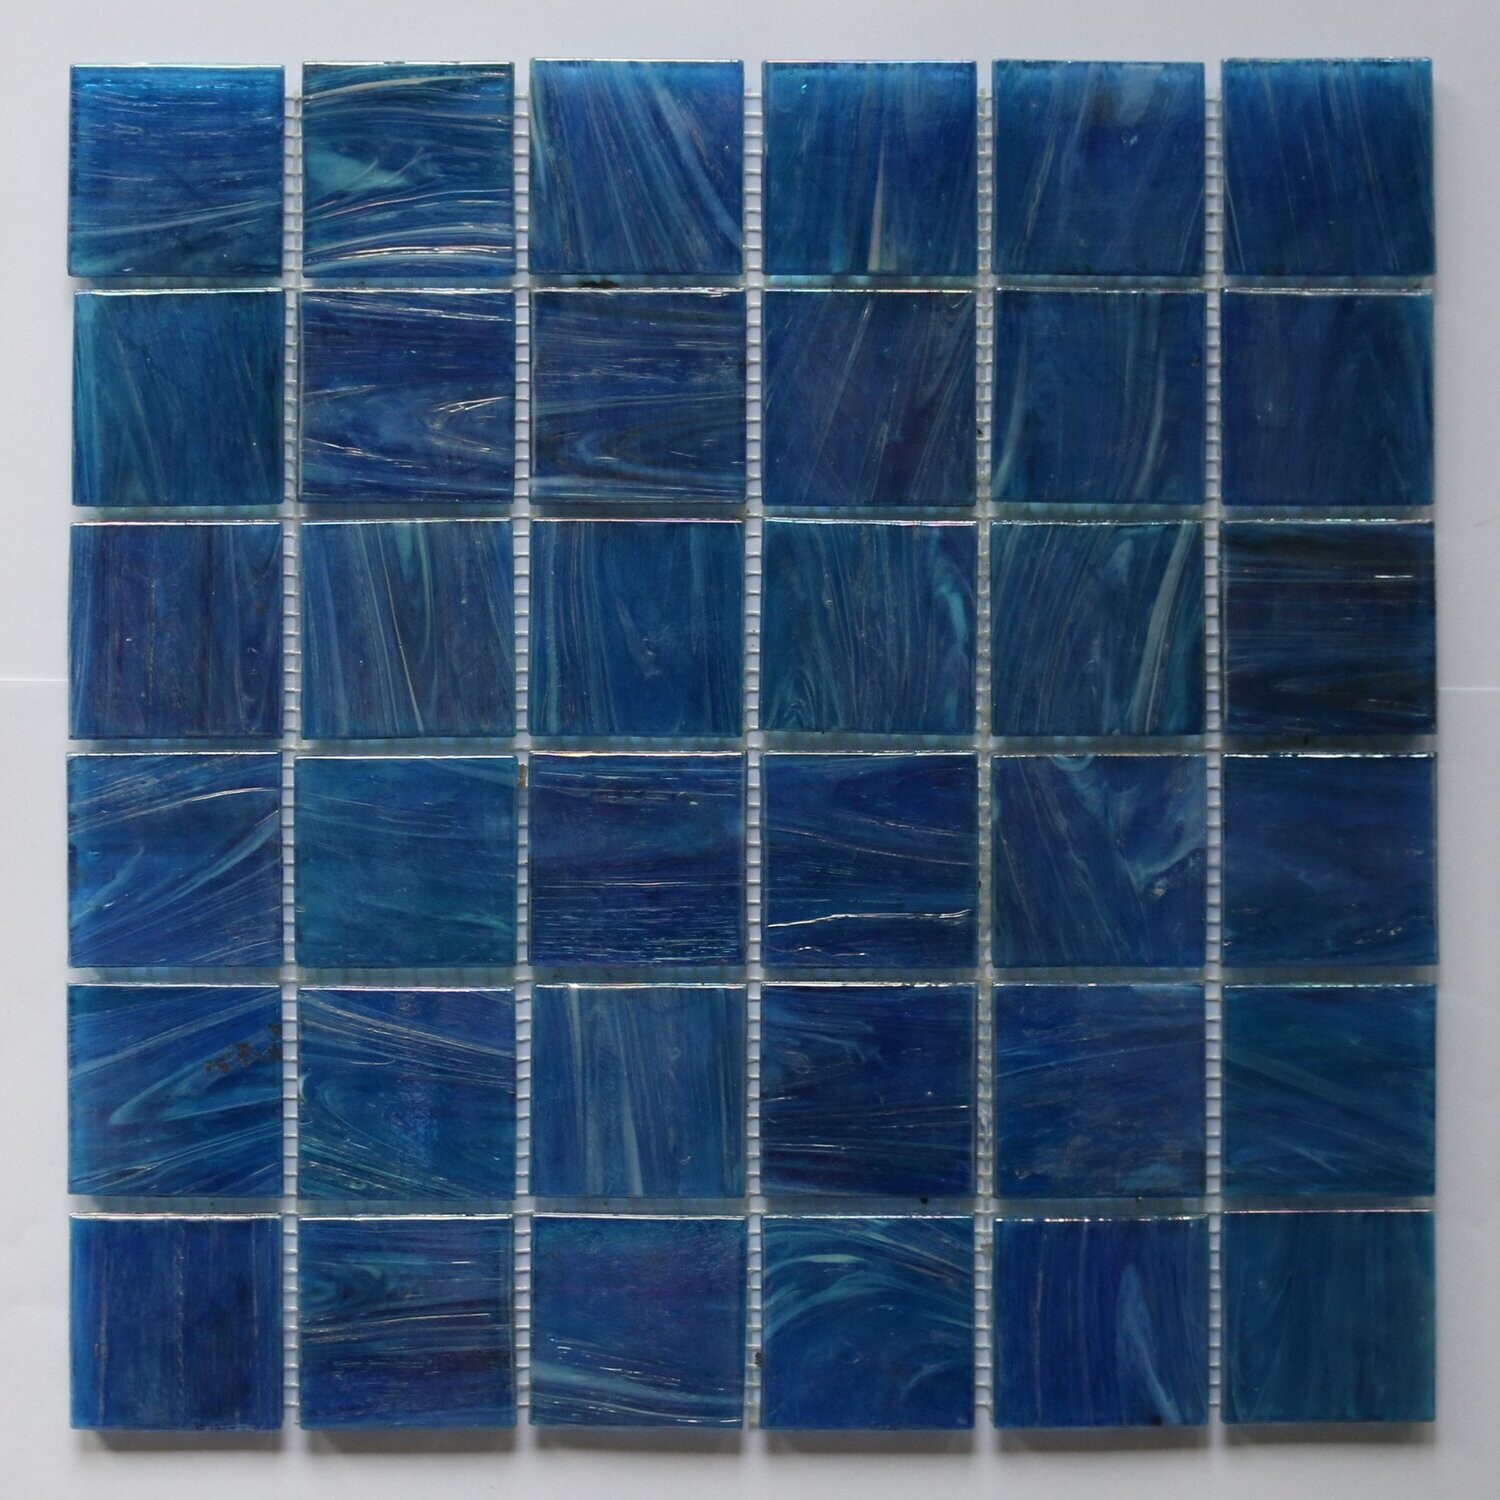 Lux Irid Pearl Blue Glass Pool Mosaic